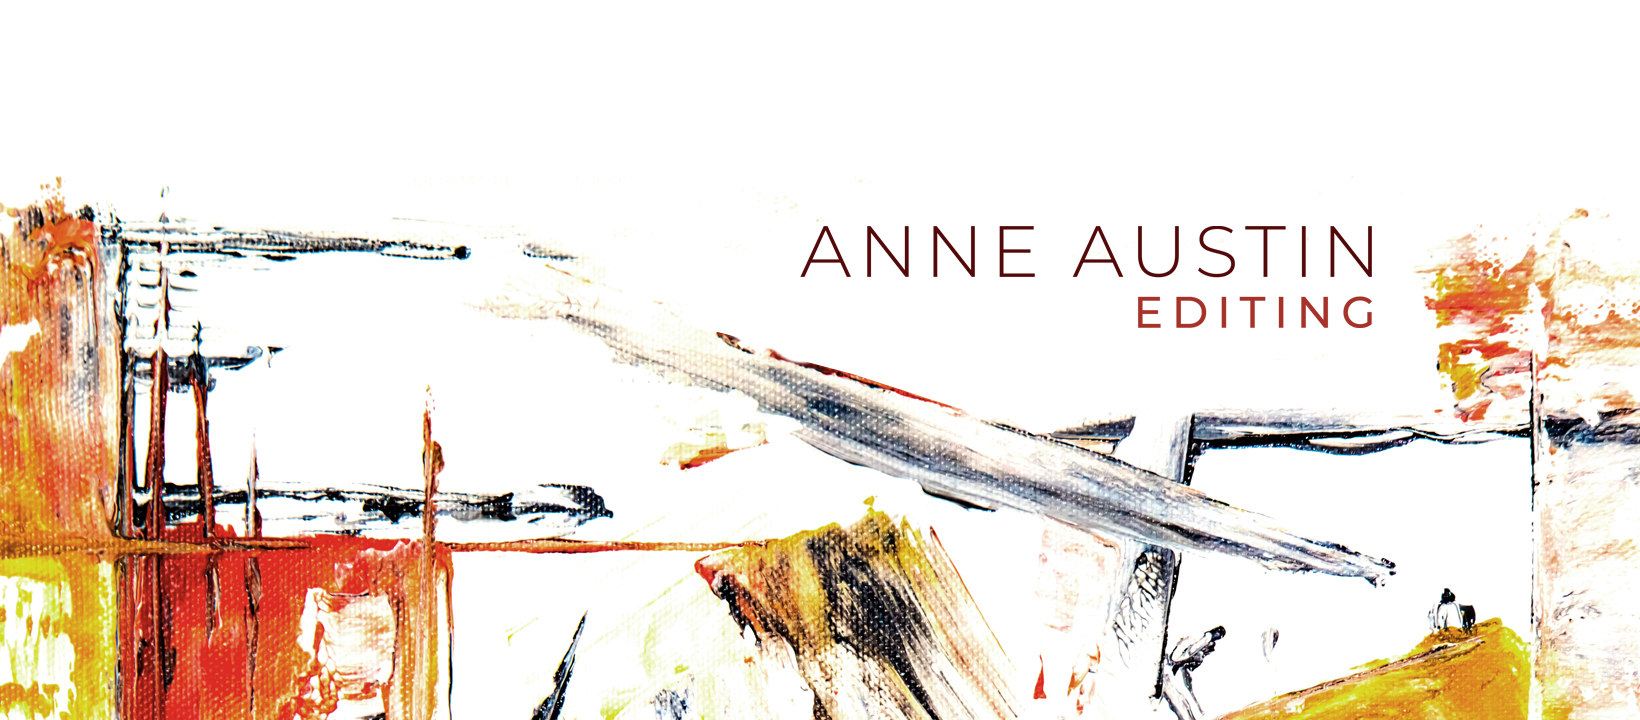 Anne Austin Editing